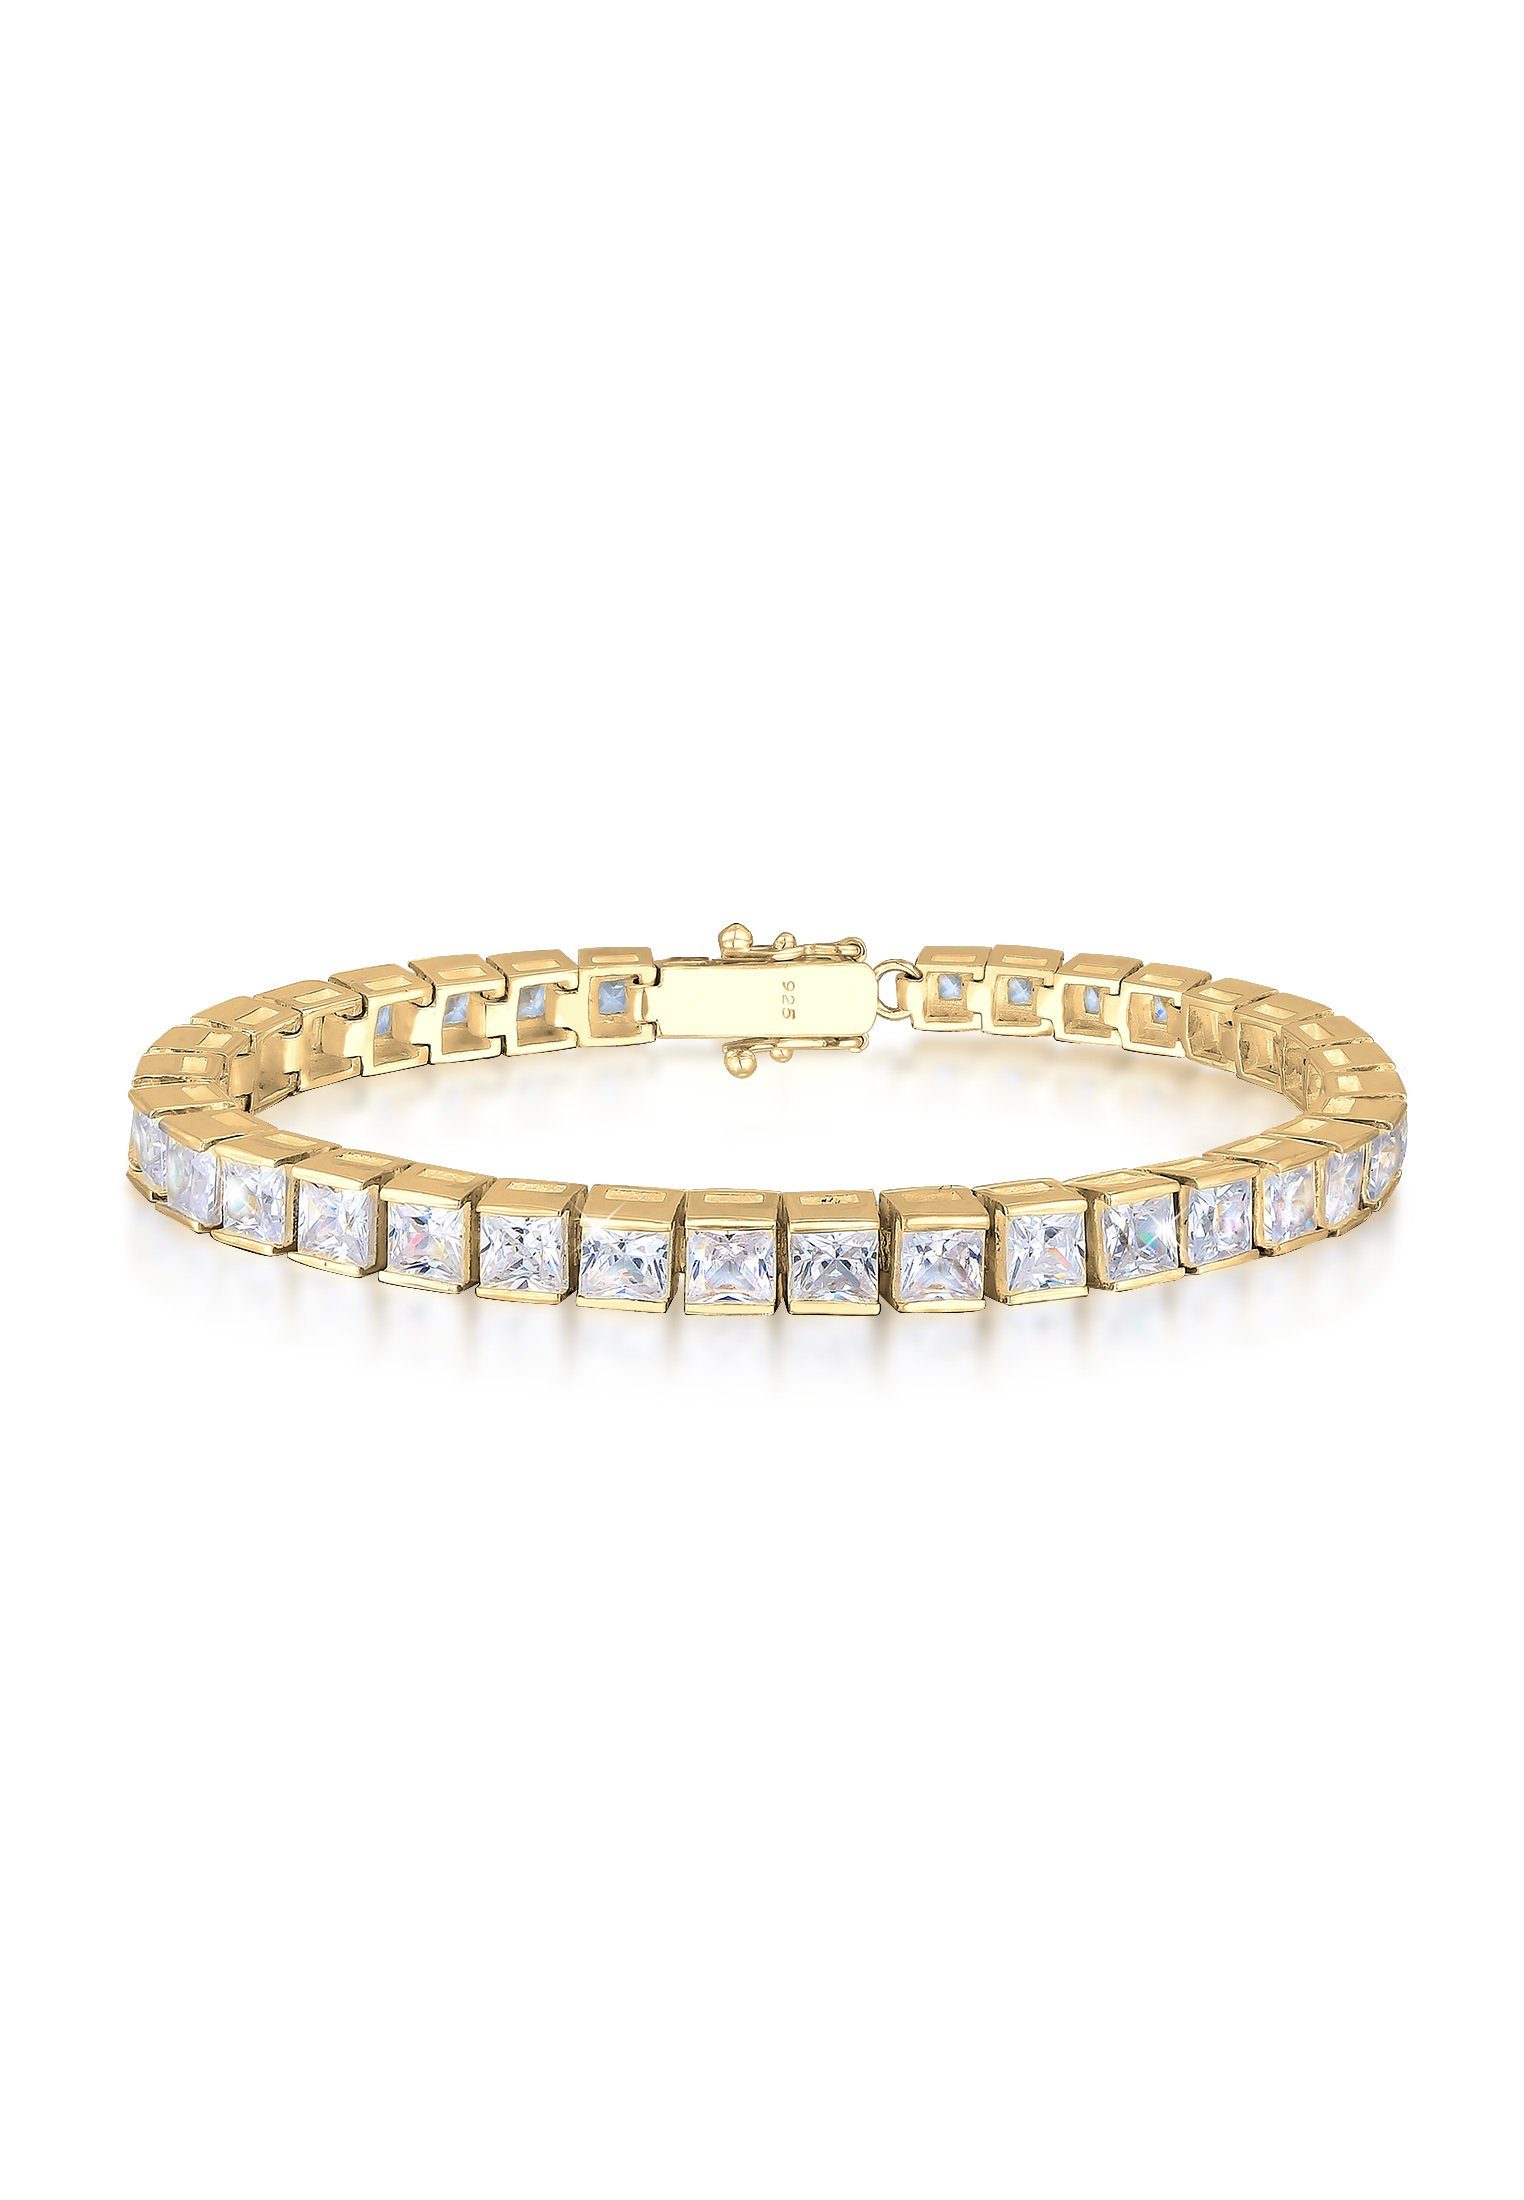 Armband Elli Tennisarmband Silber Kristall Gold Sparkle 925 Premium Zirkonia